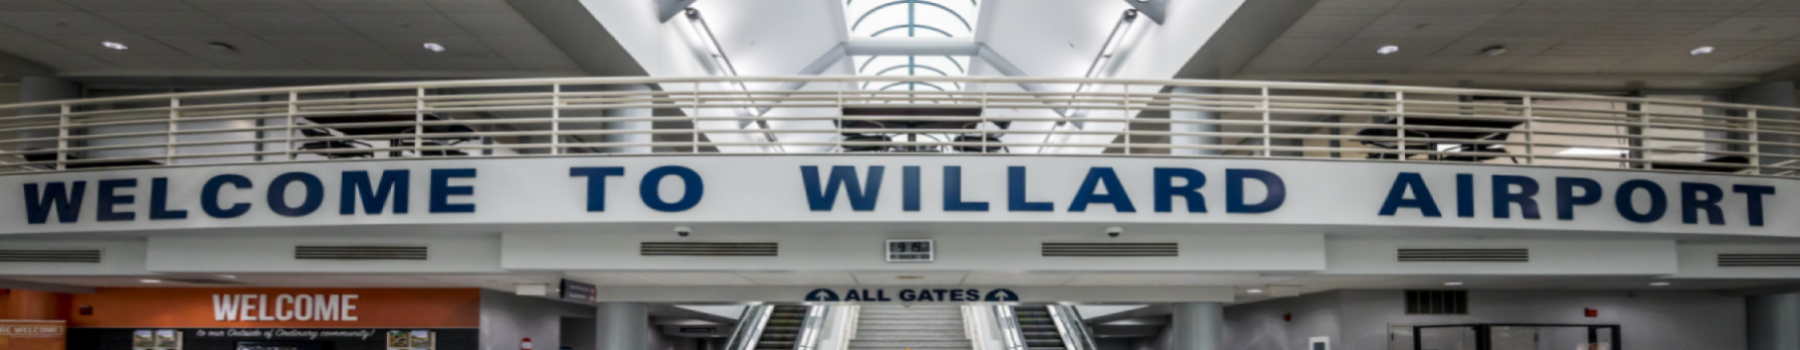 Welcome to Willard Airport